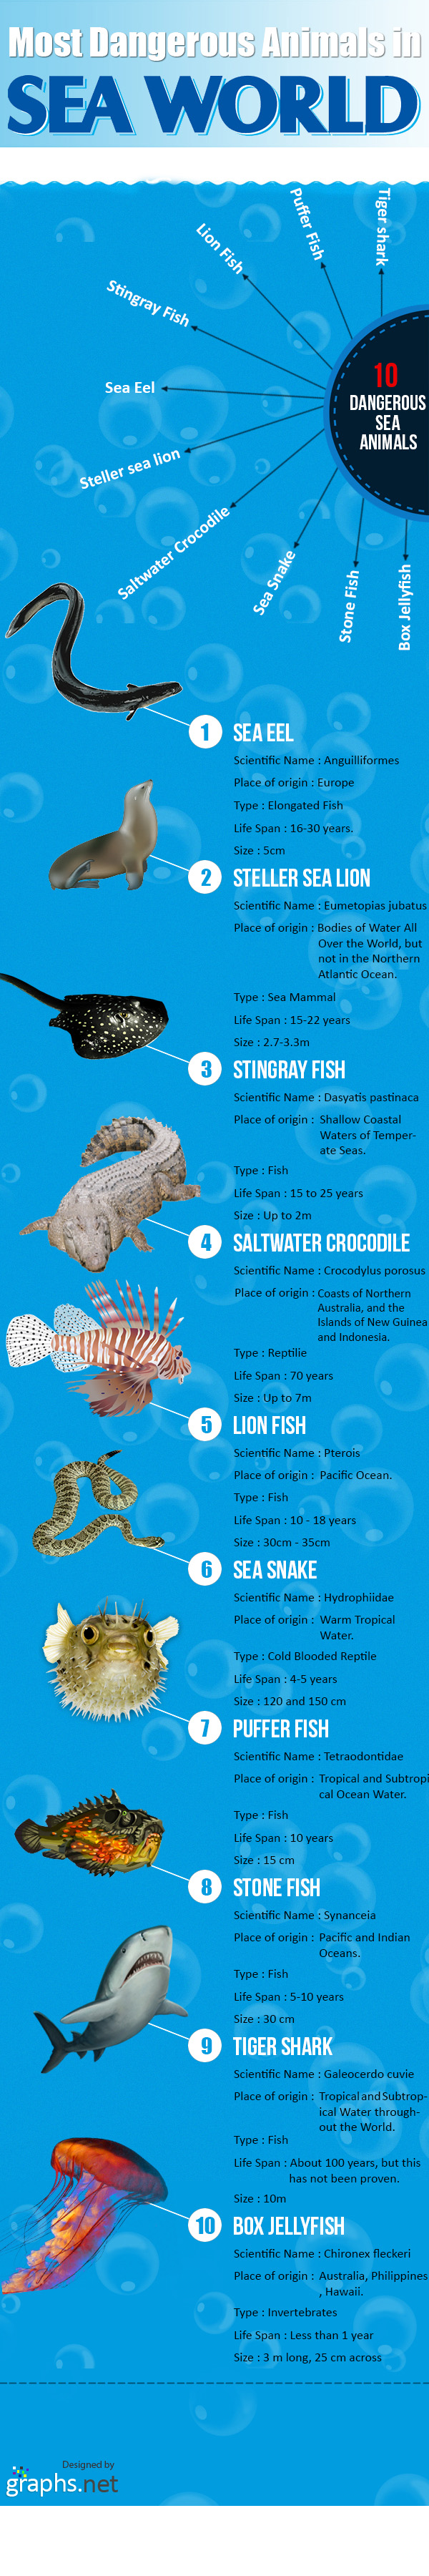 Most Dangerous Animals in Sea World